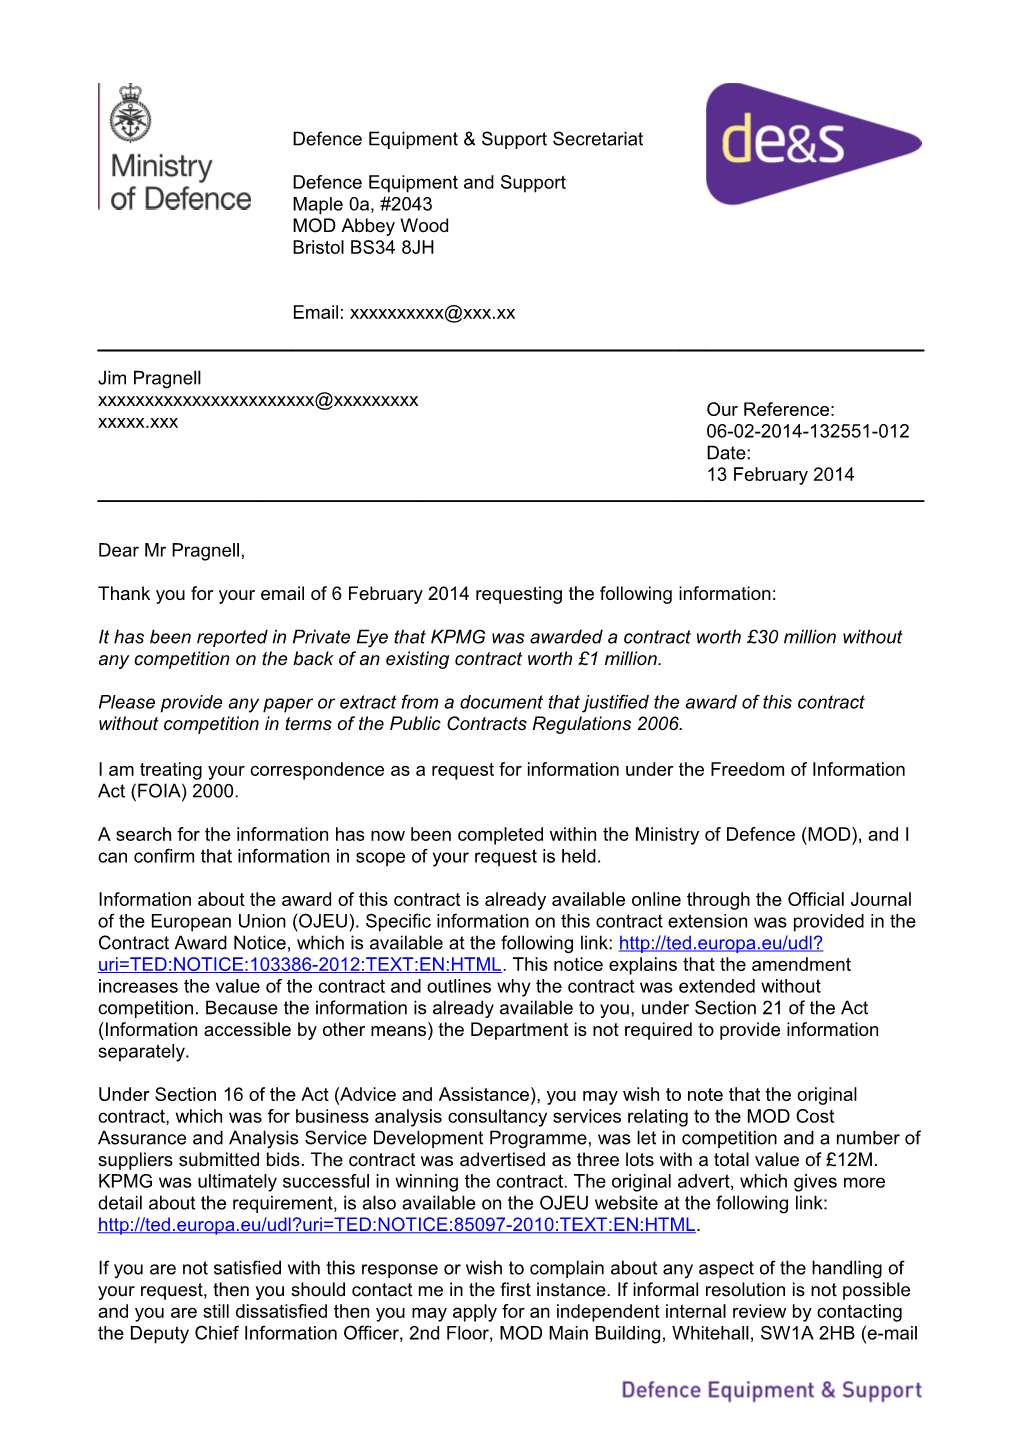 20140212-06-02-2014-132551-012 Pragnell KPMG Contract-U